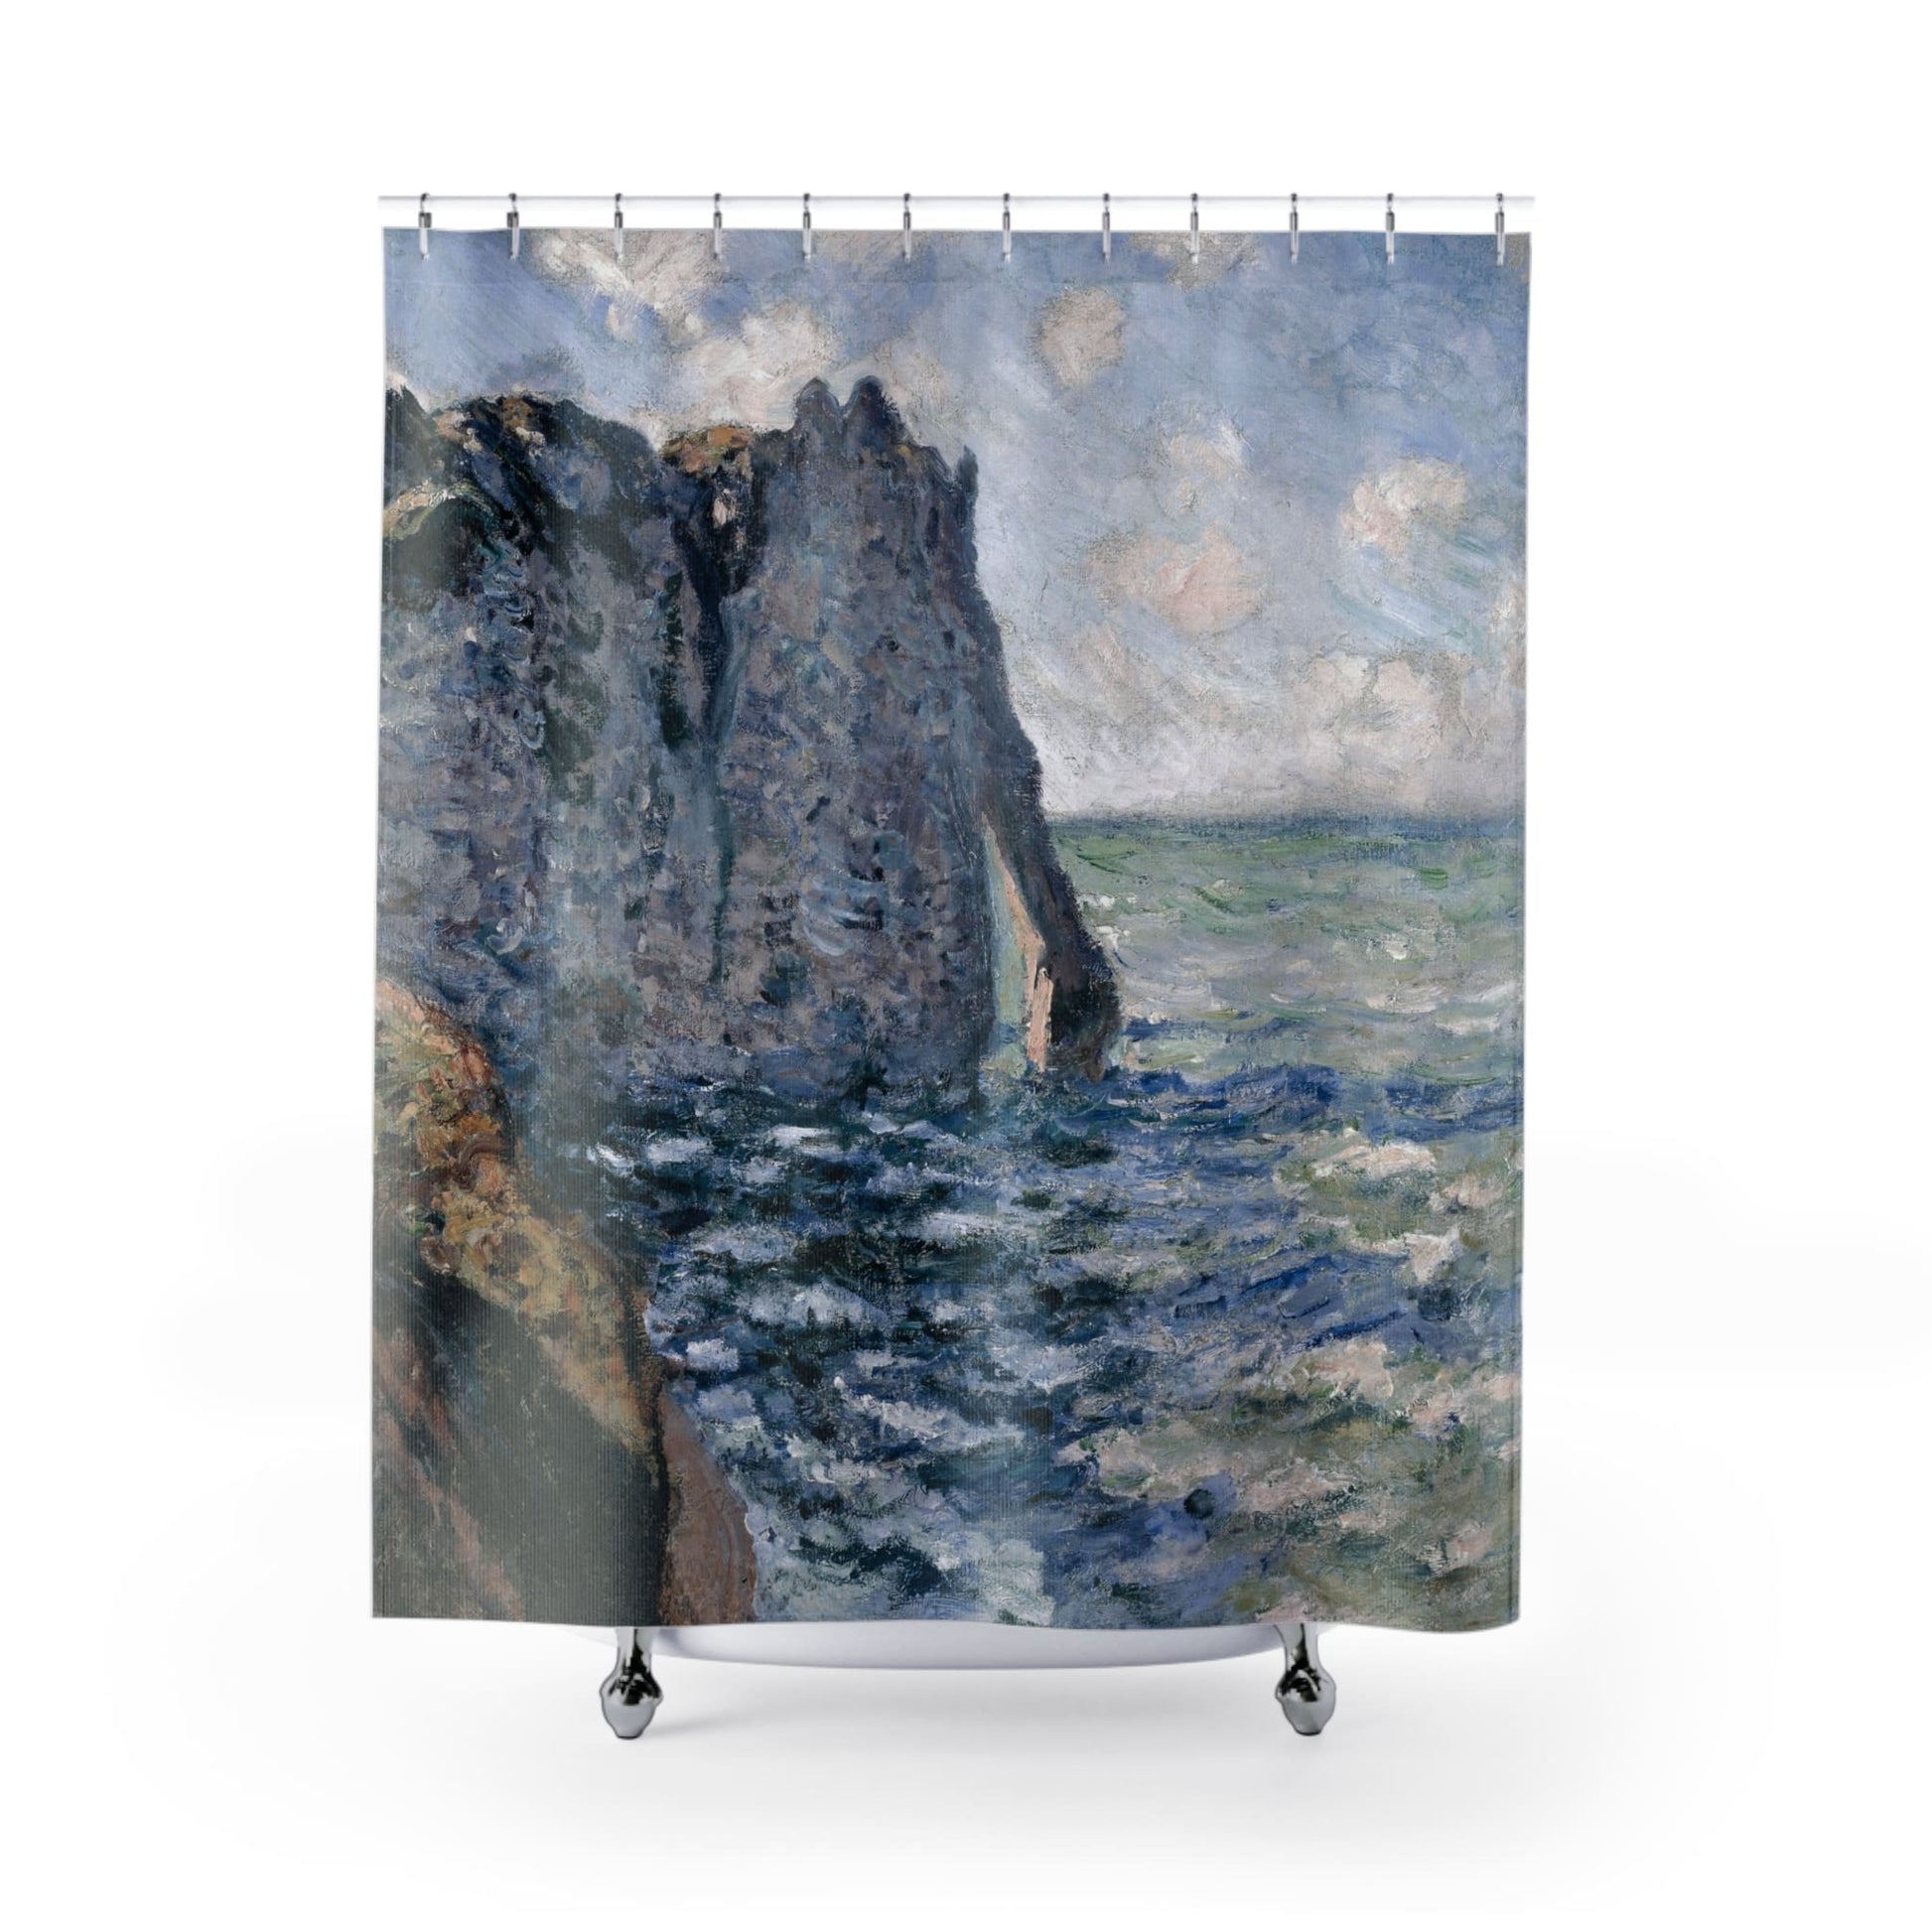 Beach Shower Curtain with nautical design, marine-themed bathroom decor featuring serene beach scenes.